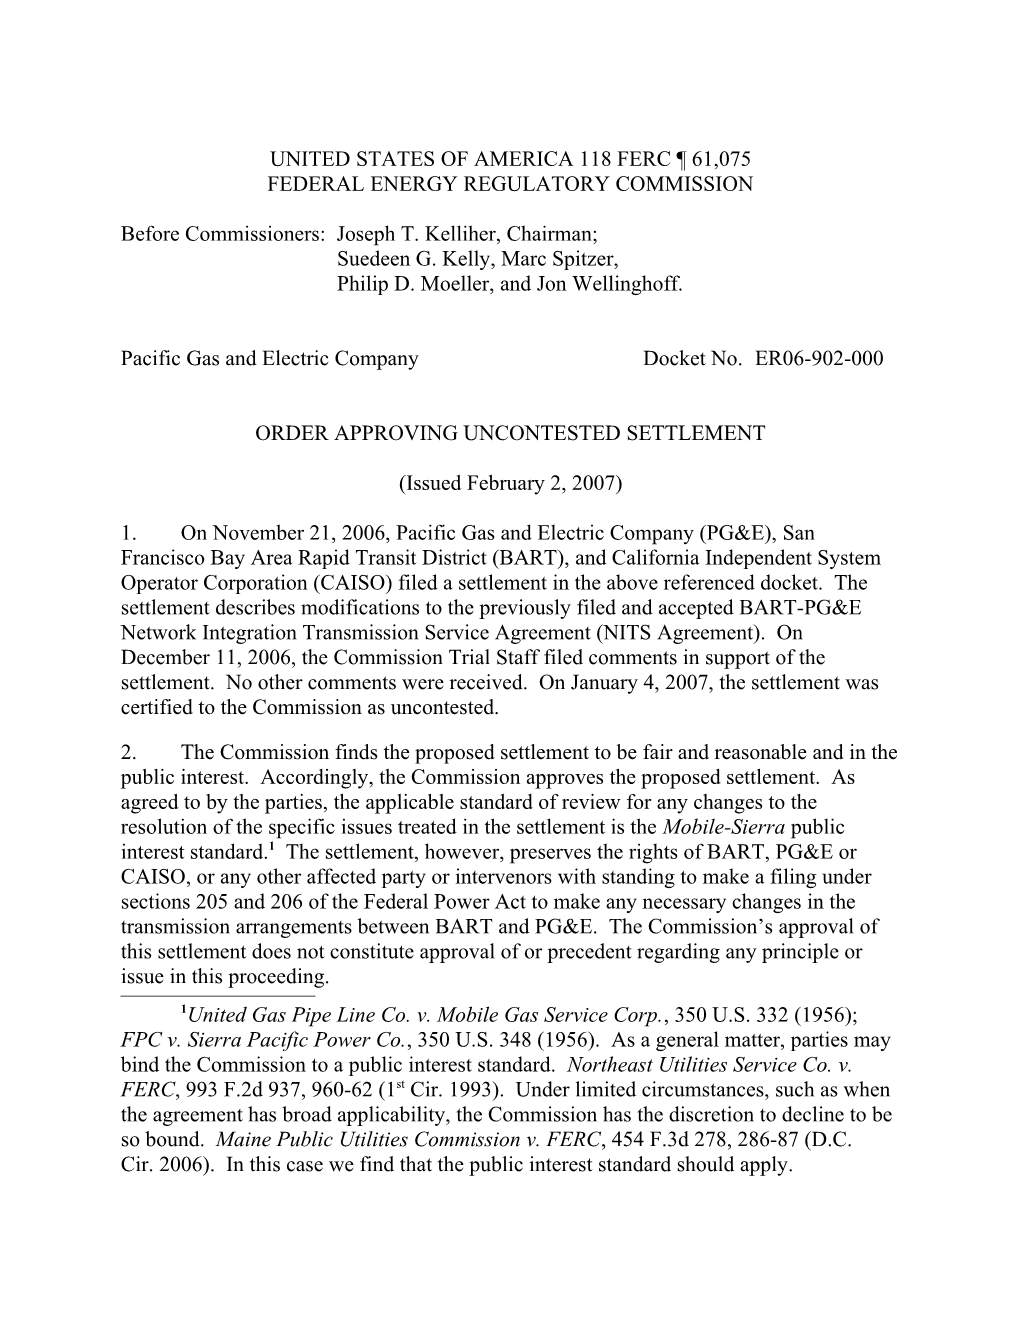 February 2, 2007 Order Approving Uncontested Settlement in Docket No. ER06-902-000 (PGE